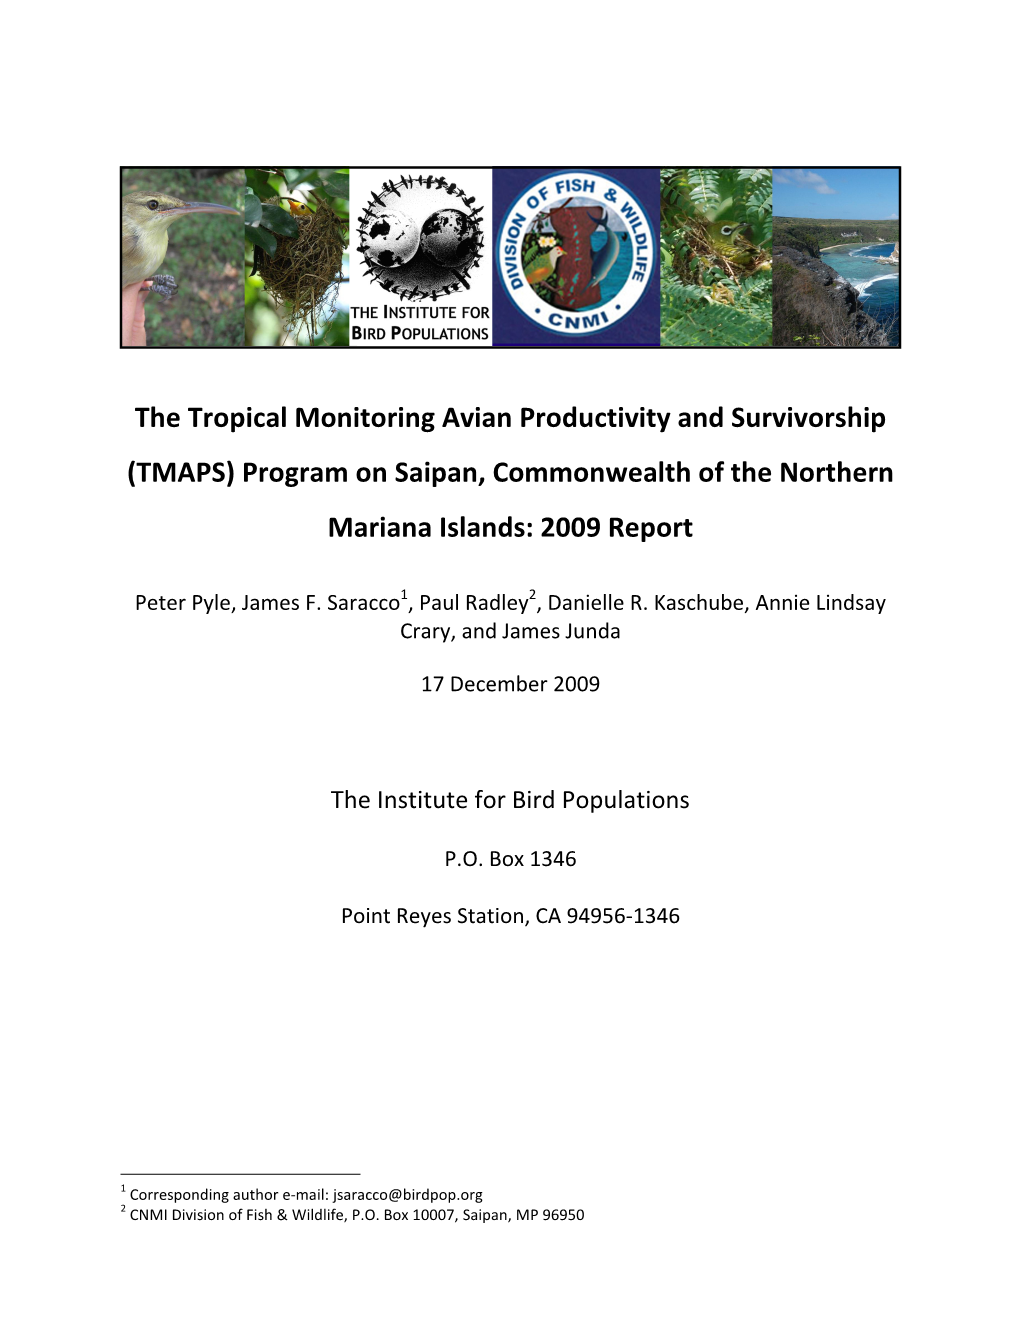 (TMAPS) Program on Saipan, Commonwealth of the Northern Mariana Islands: 2009 Report